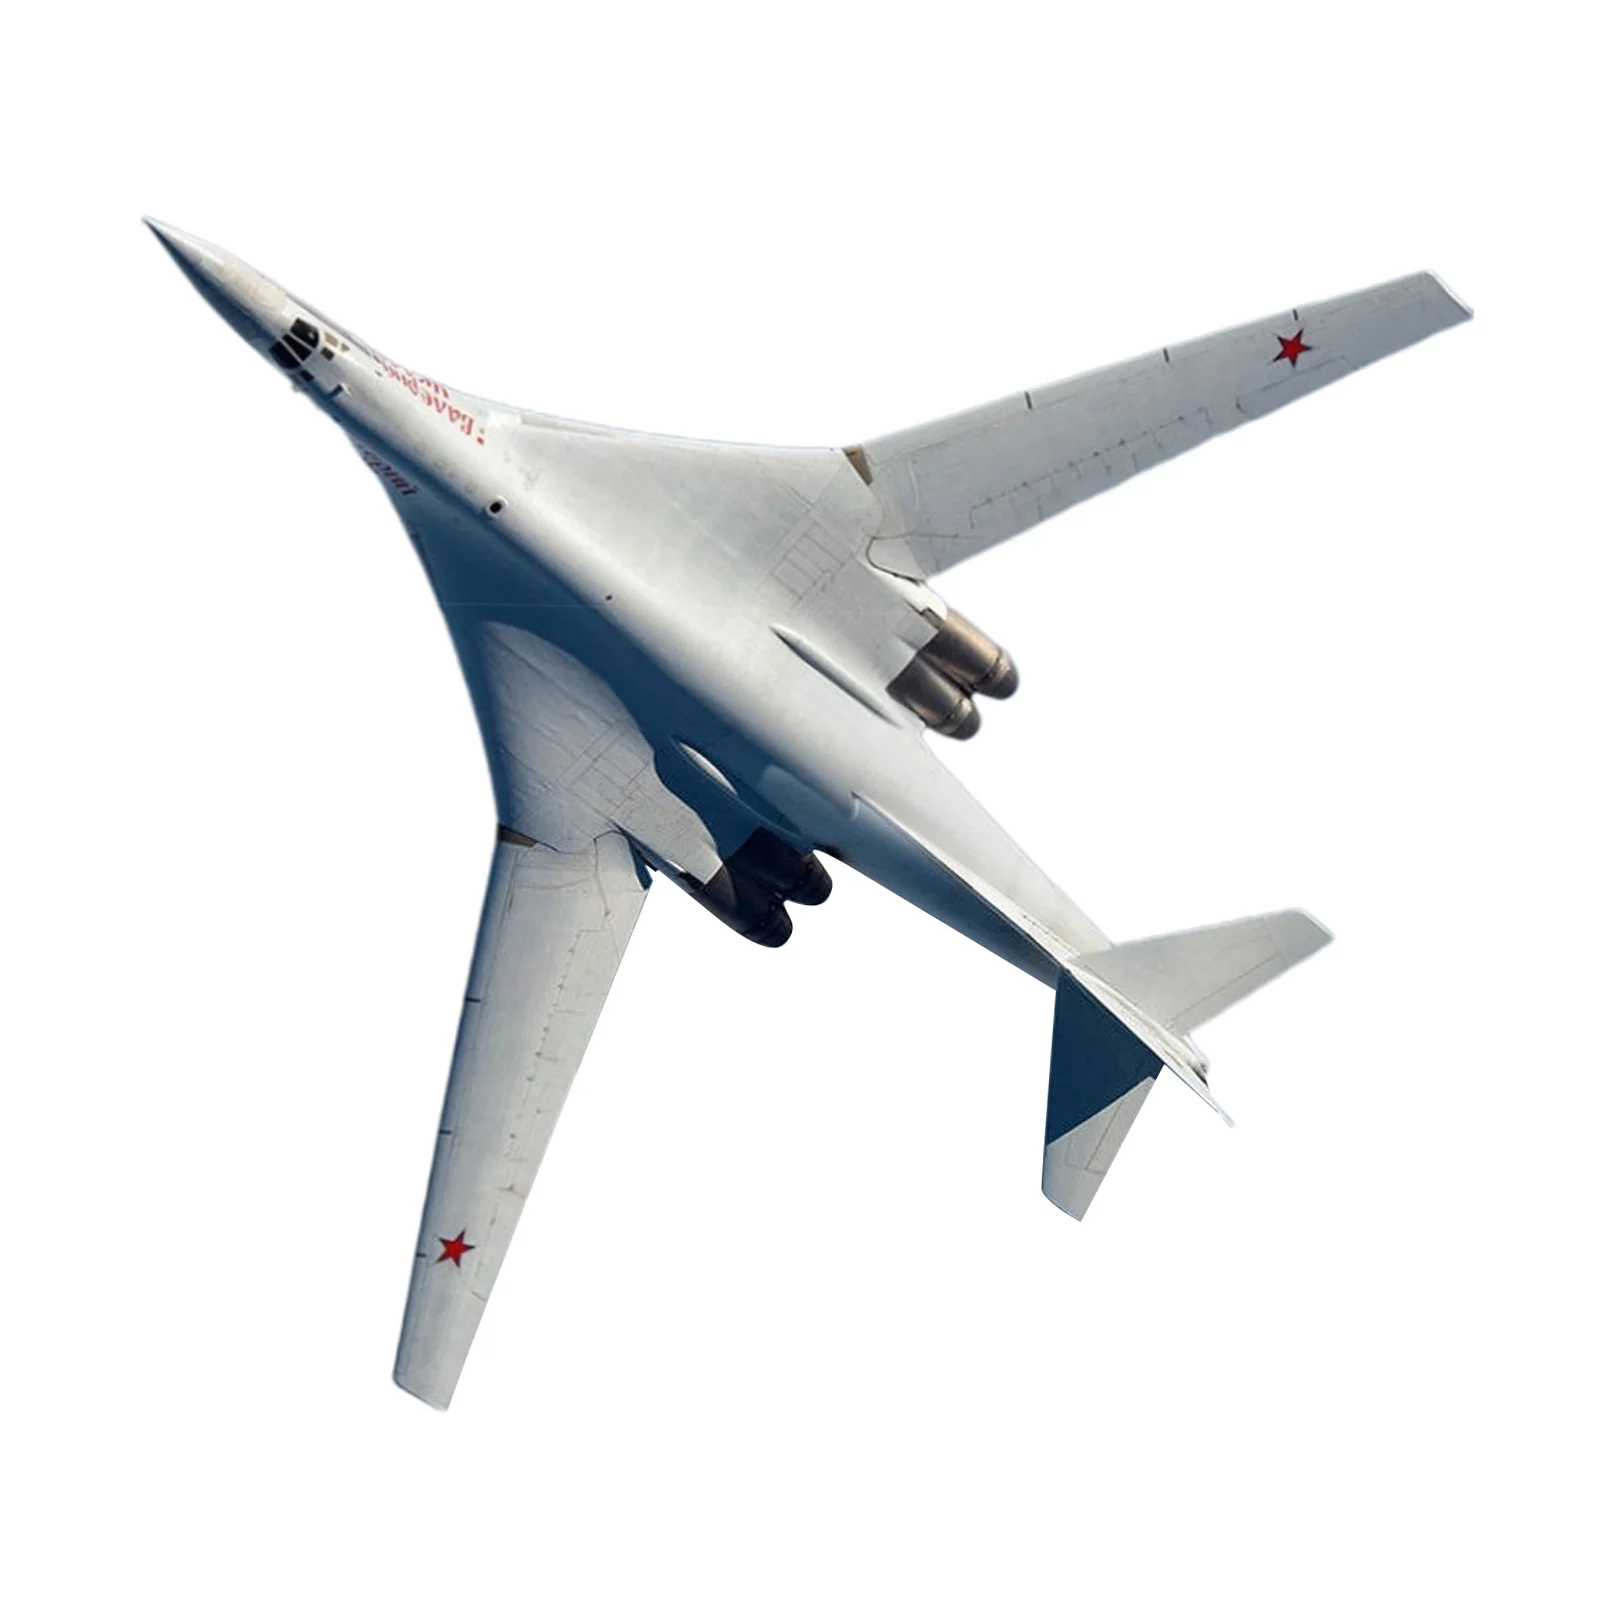 Russia AIR FORCE Tupolev Tu-160 Blackjack Bomber Weathered Version 1/100 Diecast Model